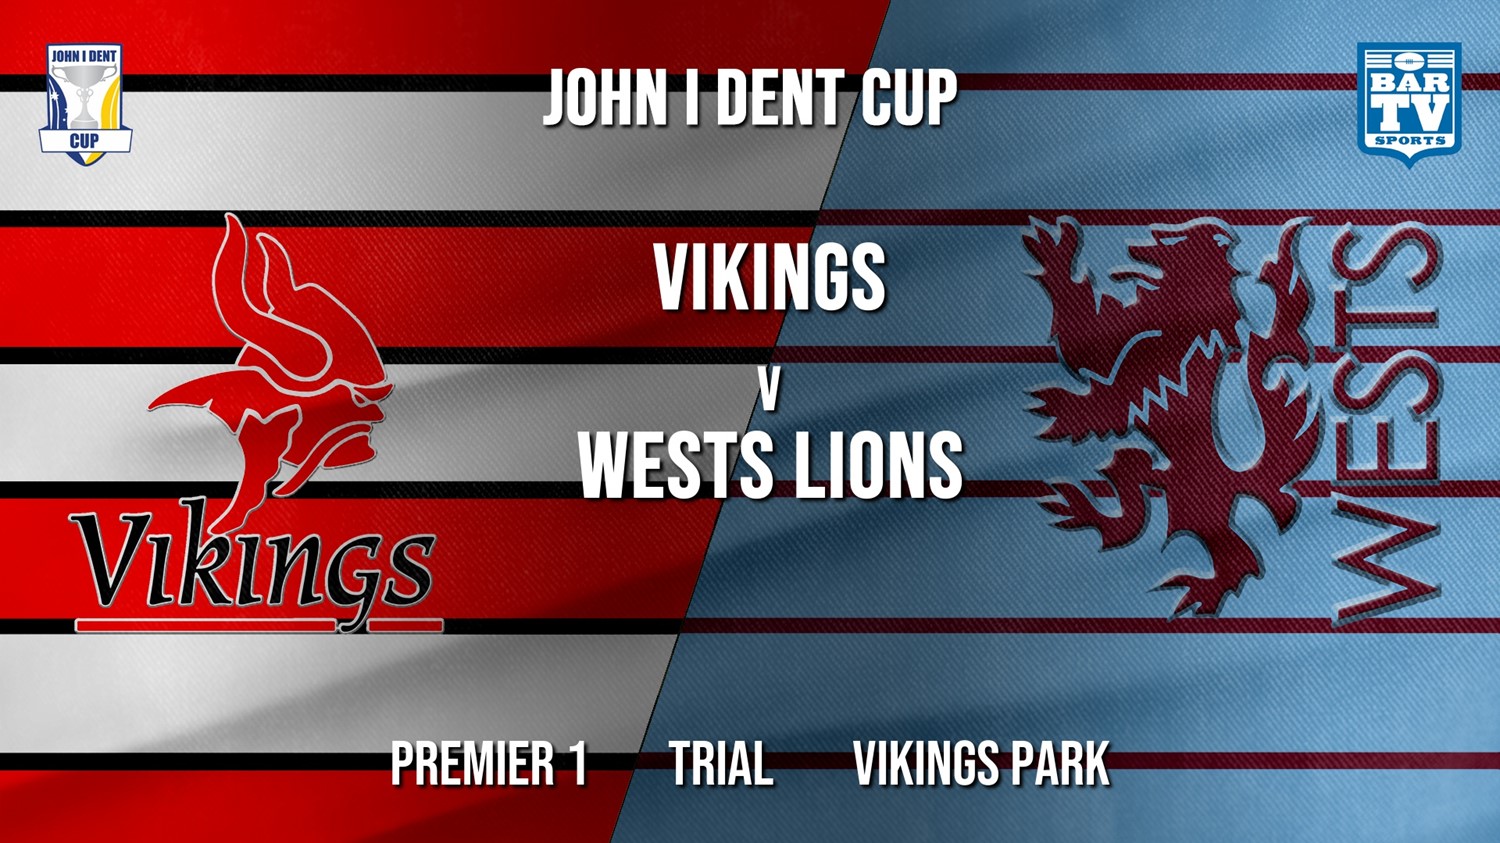 John I Dent Trial - Premier 1 - Tuggeranong Vikings v Wests Lions Slate Image